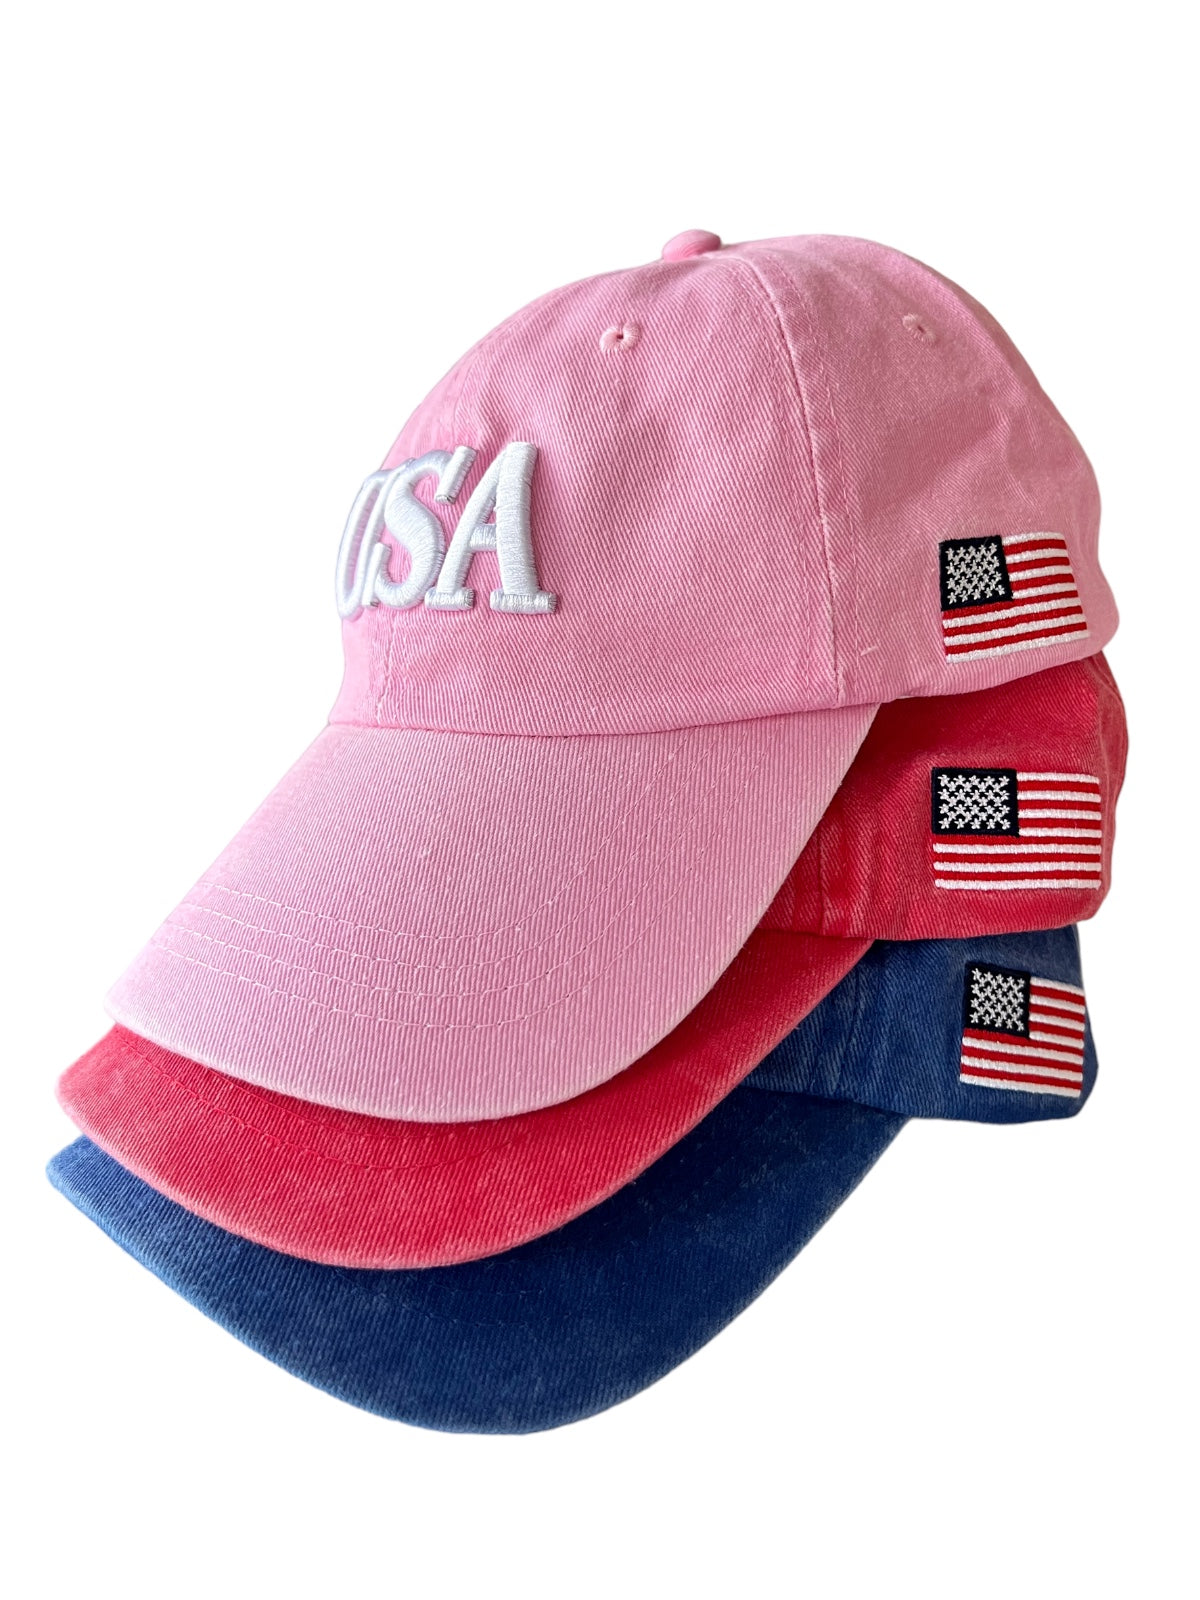 USA Adult Baseball Hat, Vintage Pink